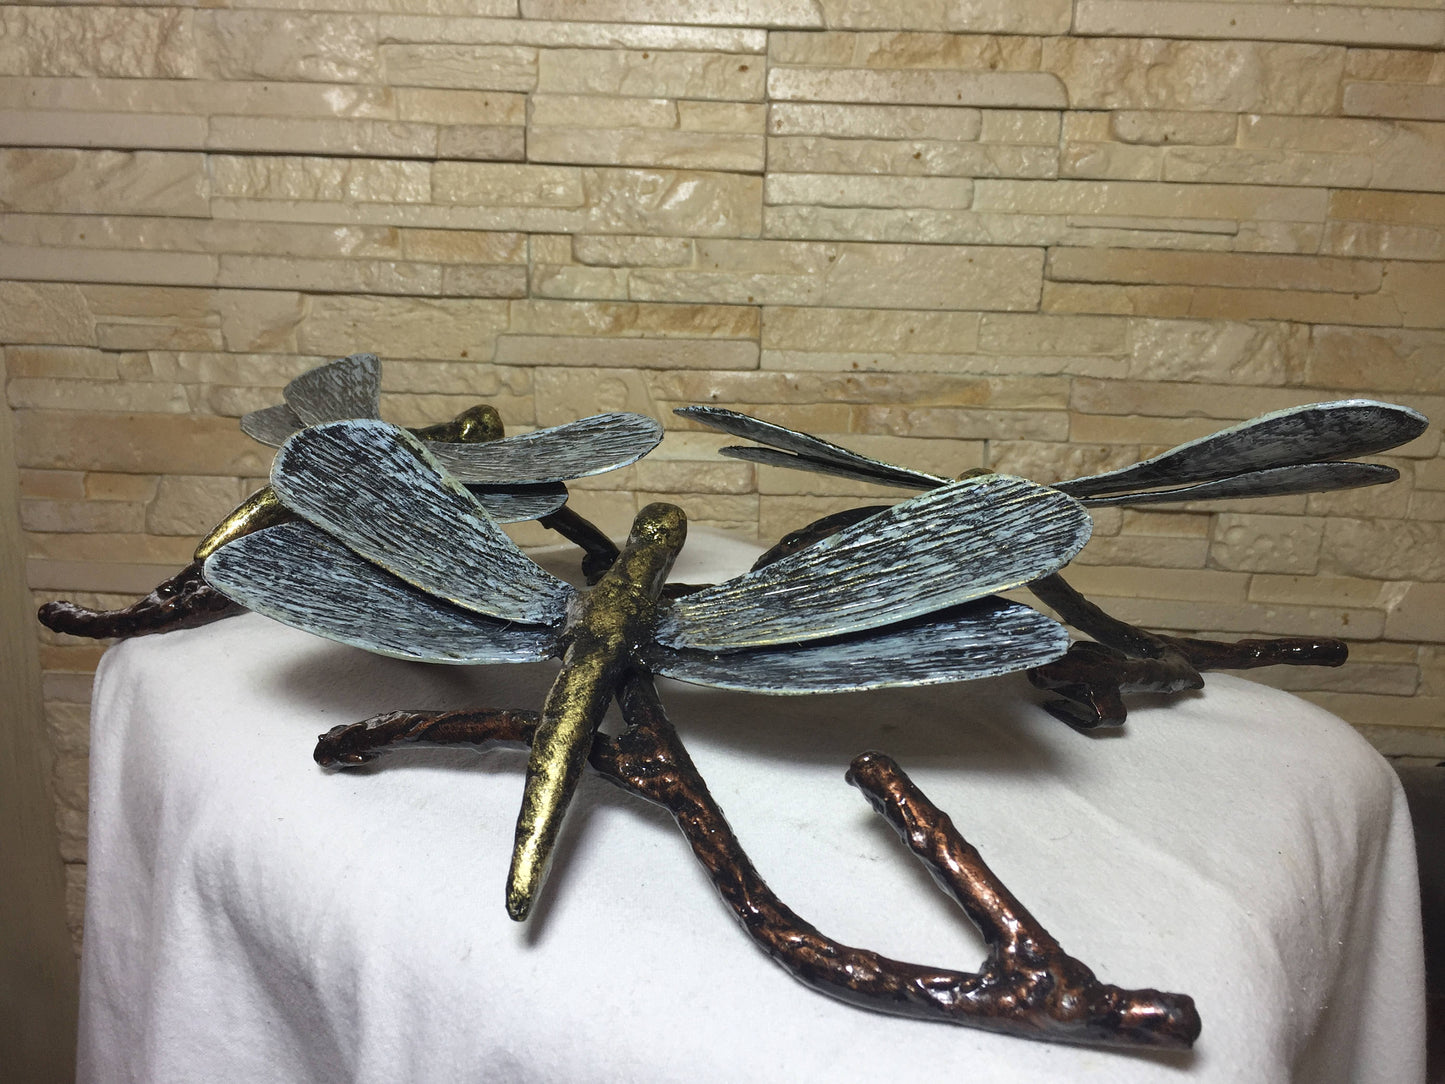 Three metal dragonflies, dragonfly, dragonfly figurine, metal statue, metal statuette, insect figurine, miniature statuette, dragonfly decor